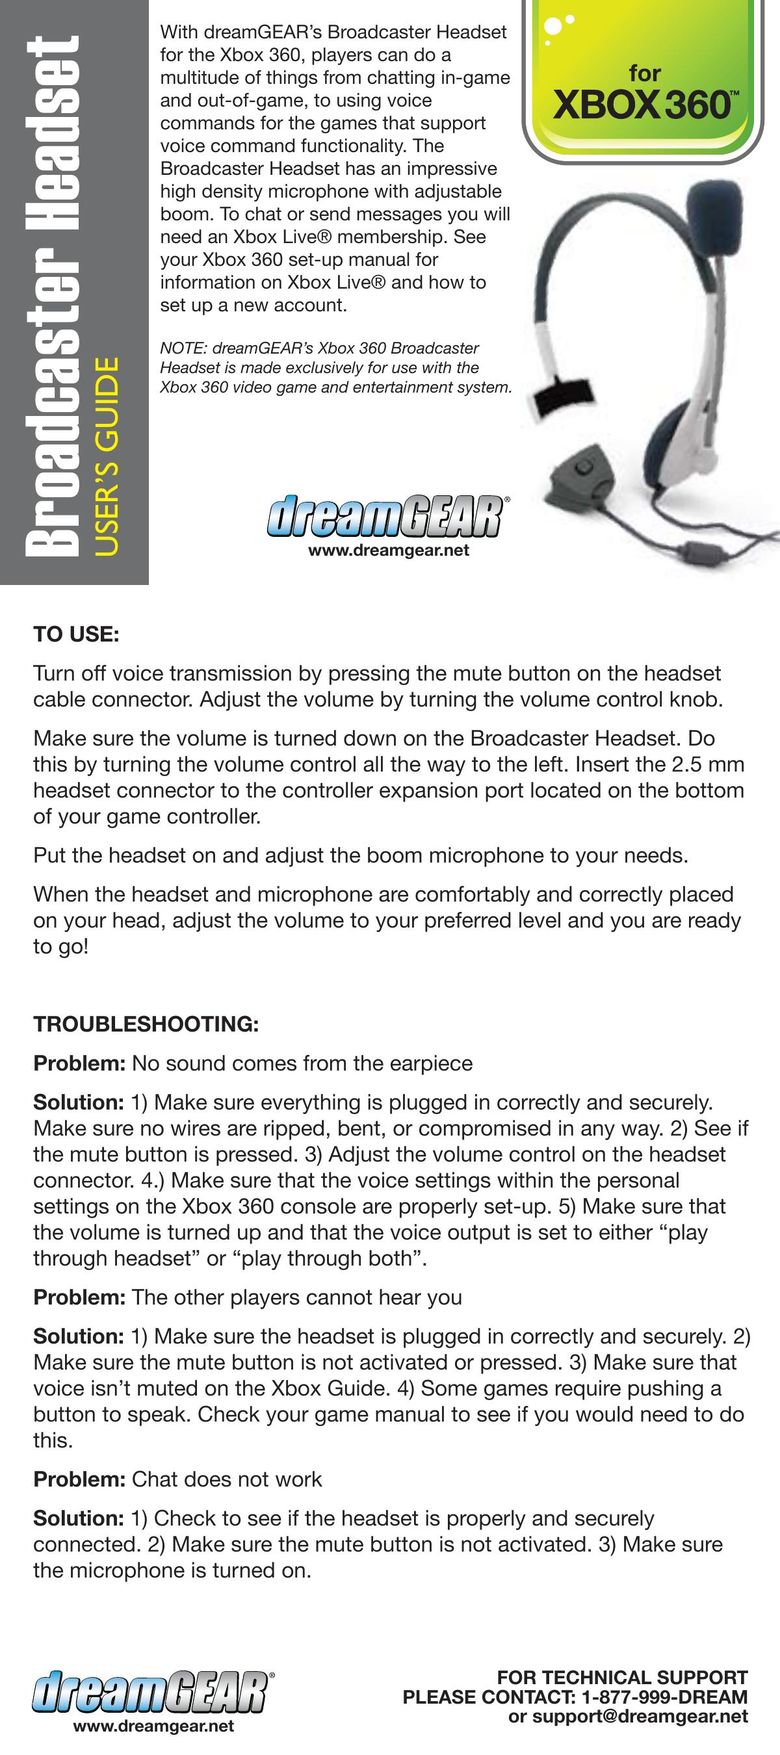 DreamGEAR DG733 Video Game Headset User Manual